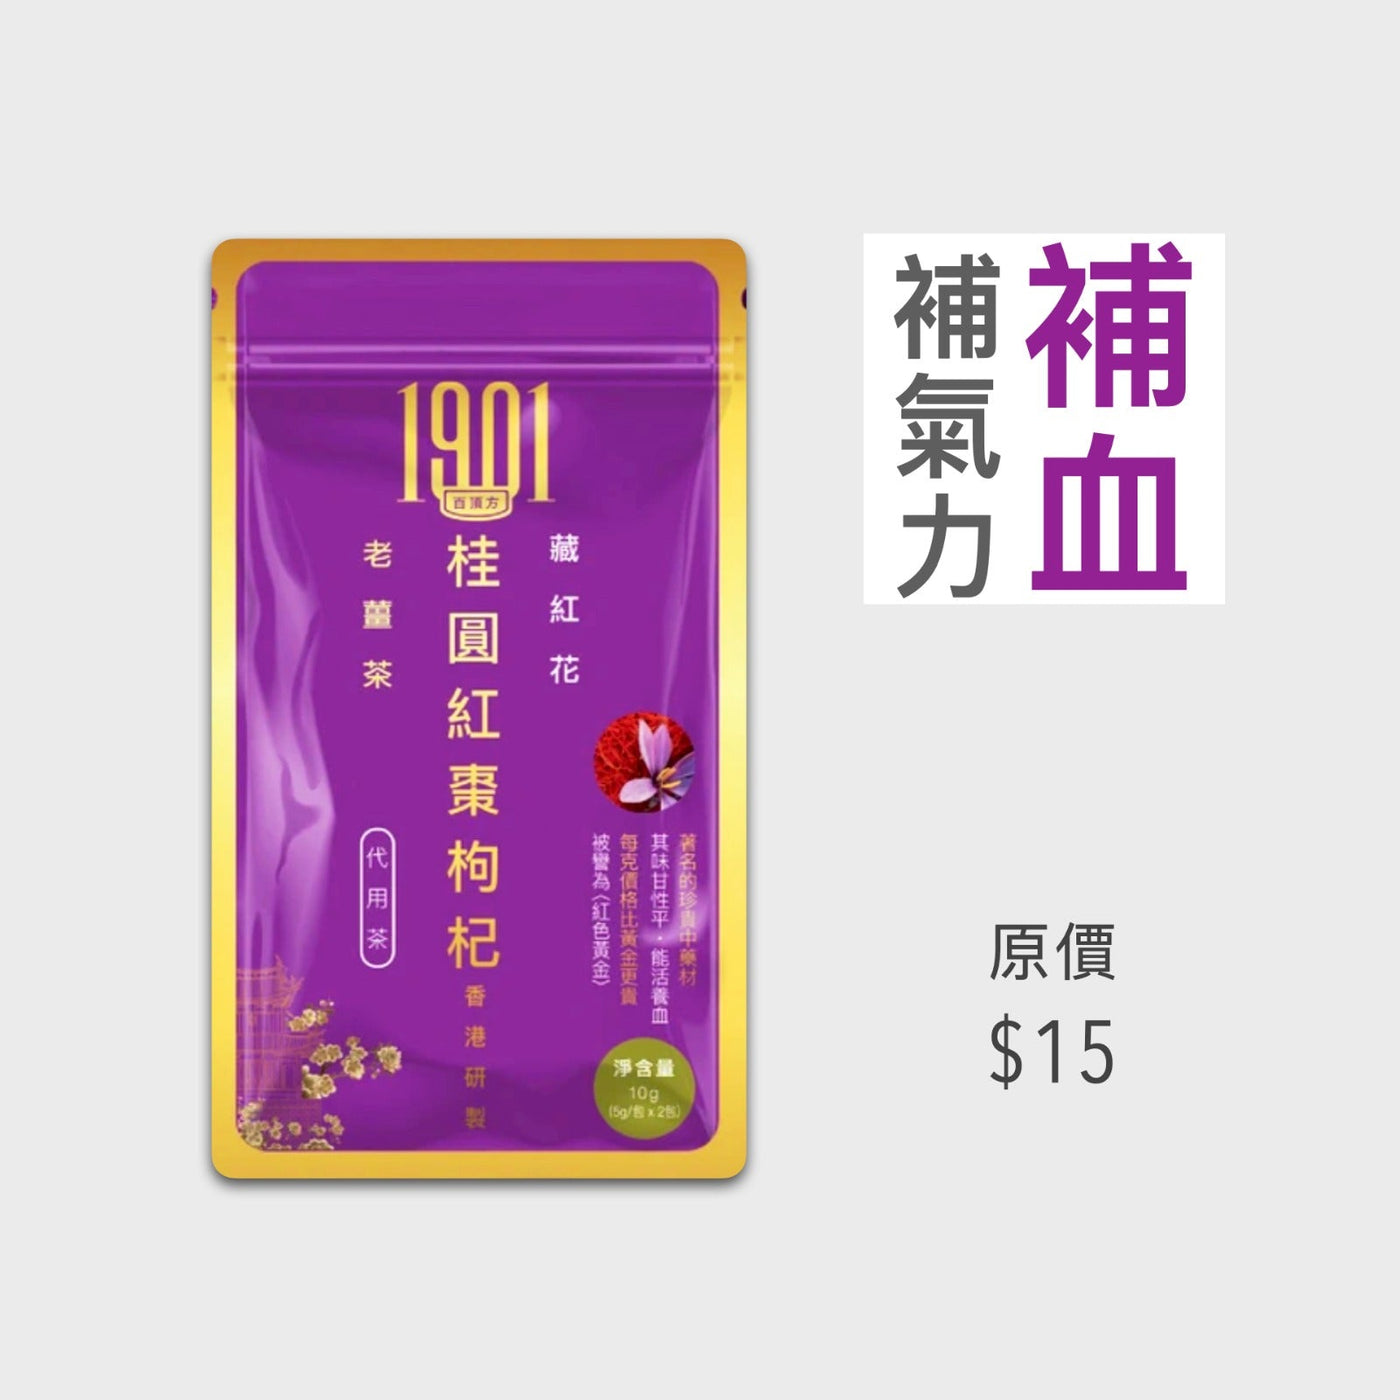 SALE: 補氣血茶療 - 桂圓紅棗枸杞薑茶 Functional Tea 1901 1包 